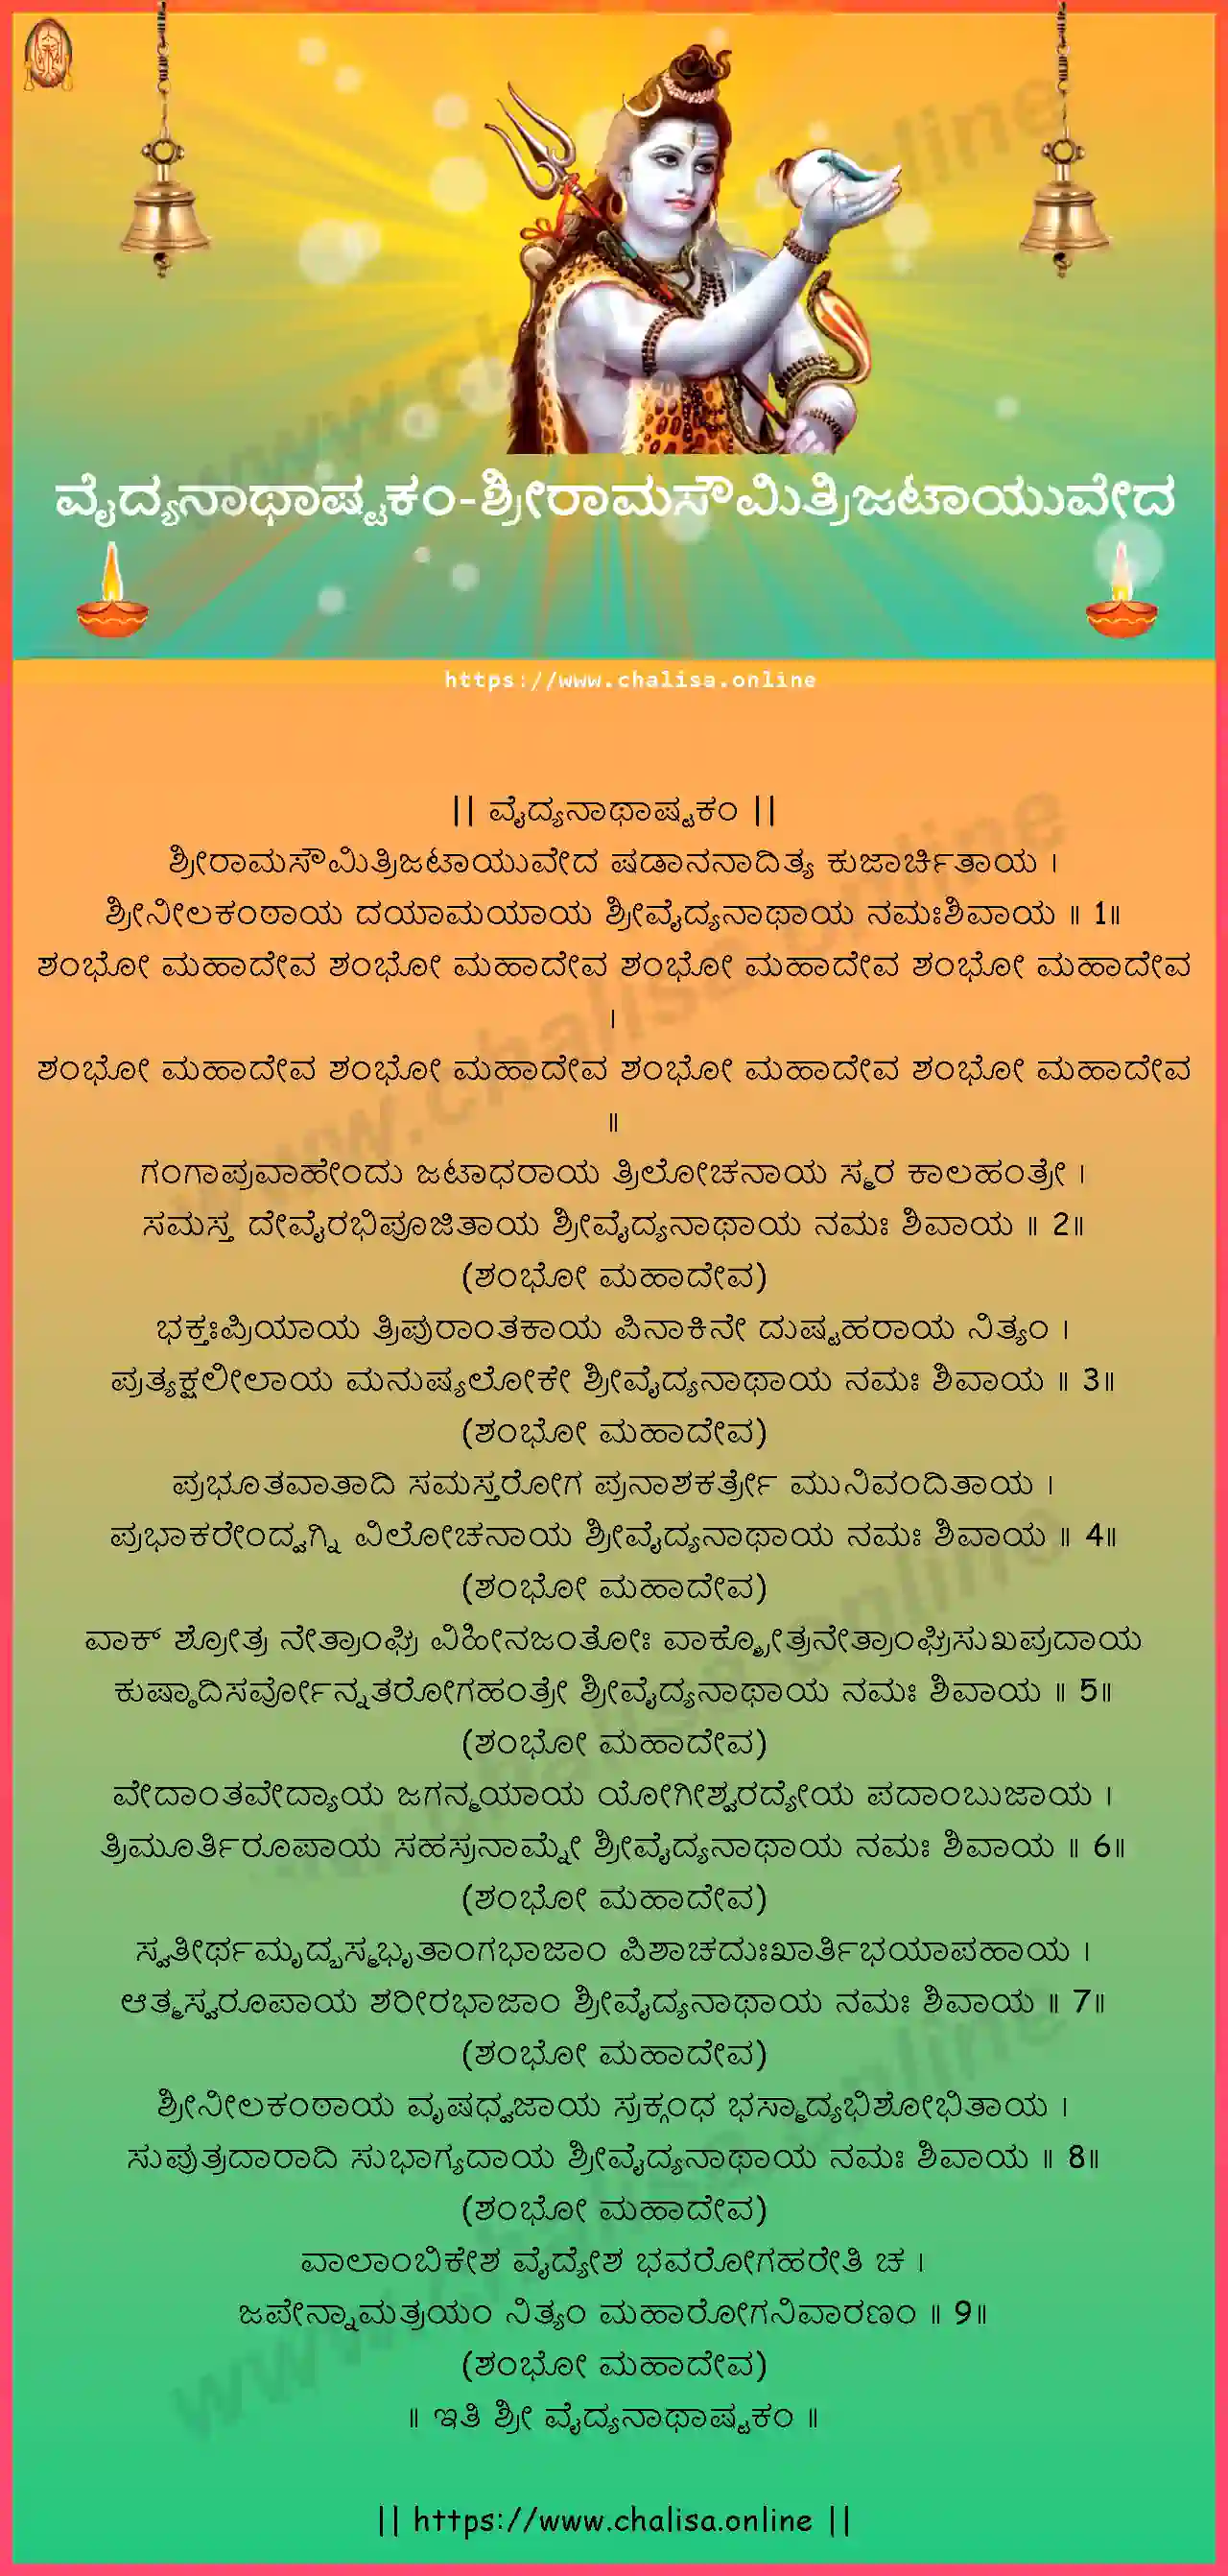 sriramasaumitrijatayuveda-vaidyanatha-ashtakam-kannada-kannada-lyrics-download